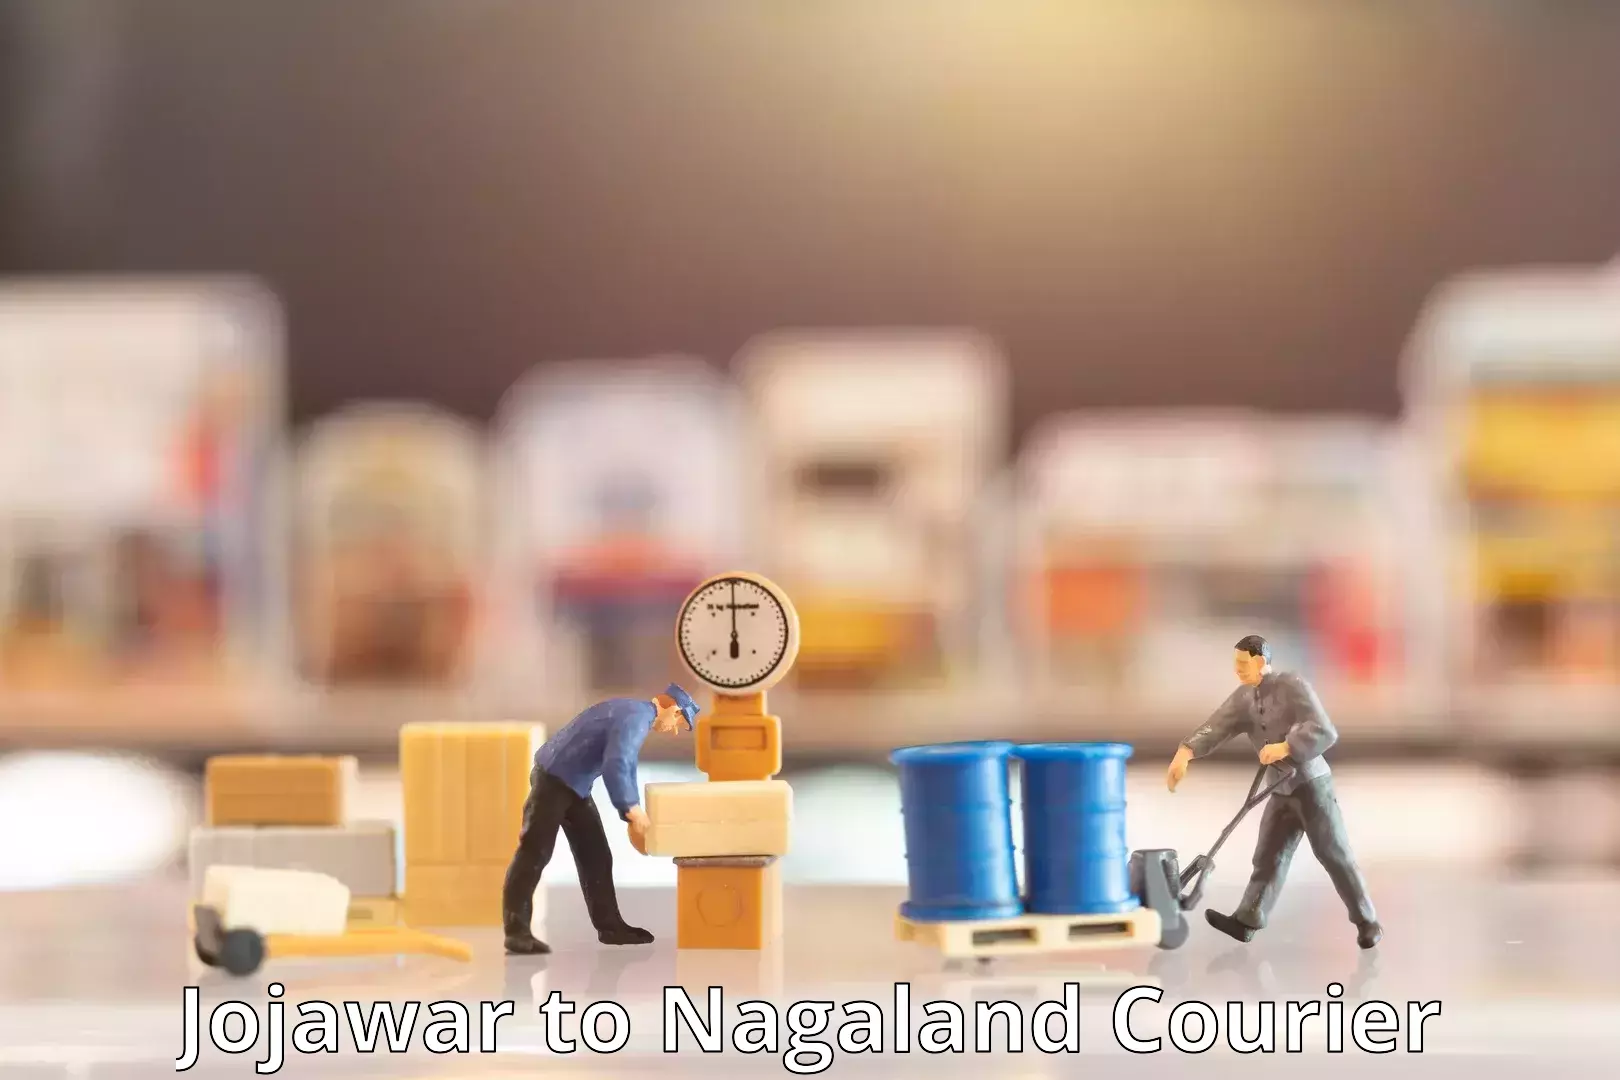 Courier service comparison Jojawar to Nagaland